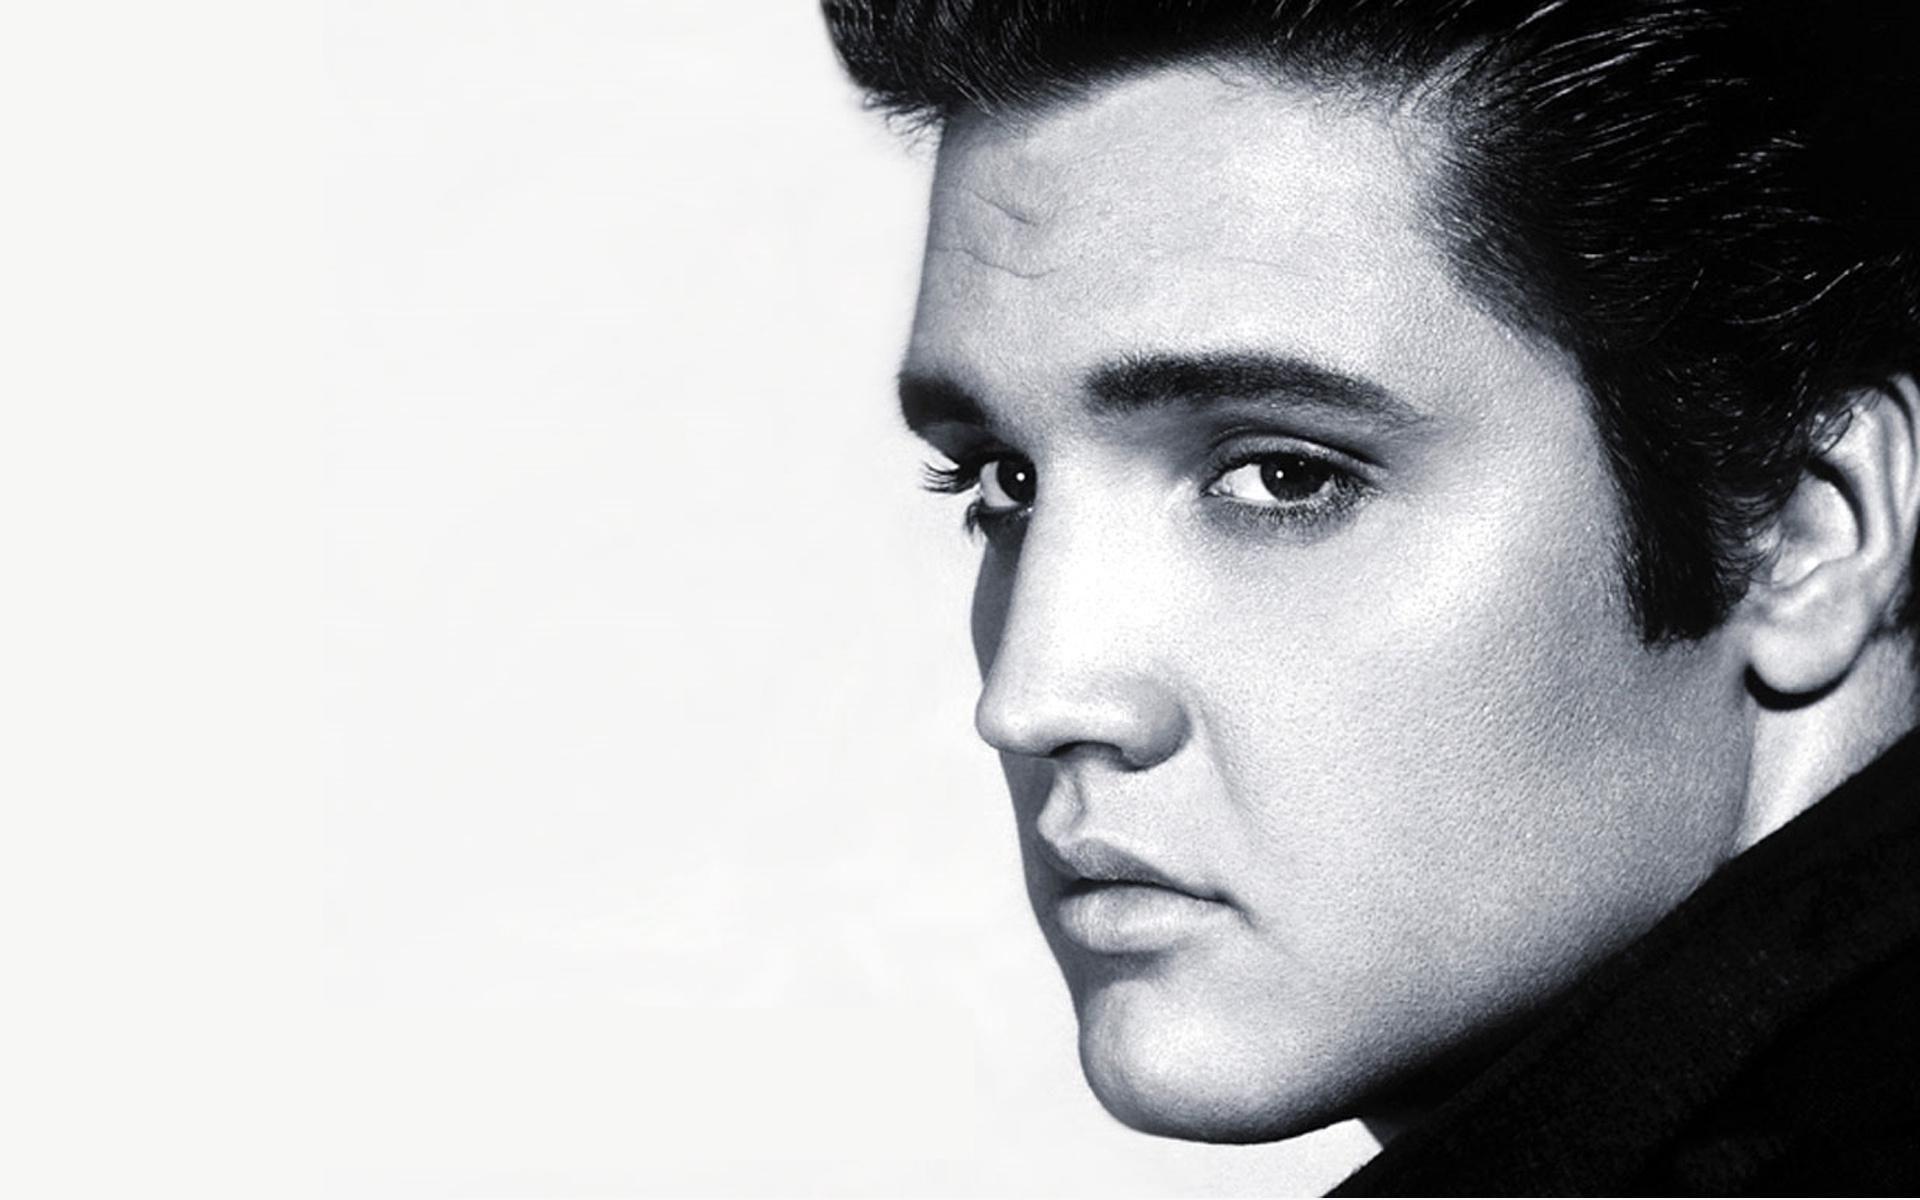 Free Elvis desktop wallpaper. Elvis Presley wallpaper. Elvis